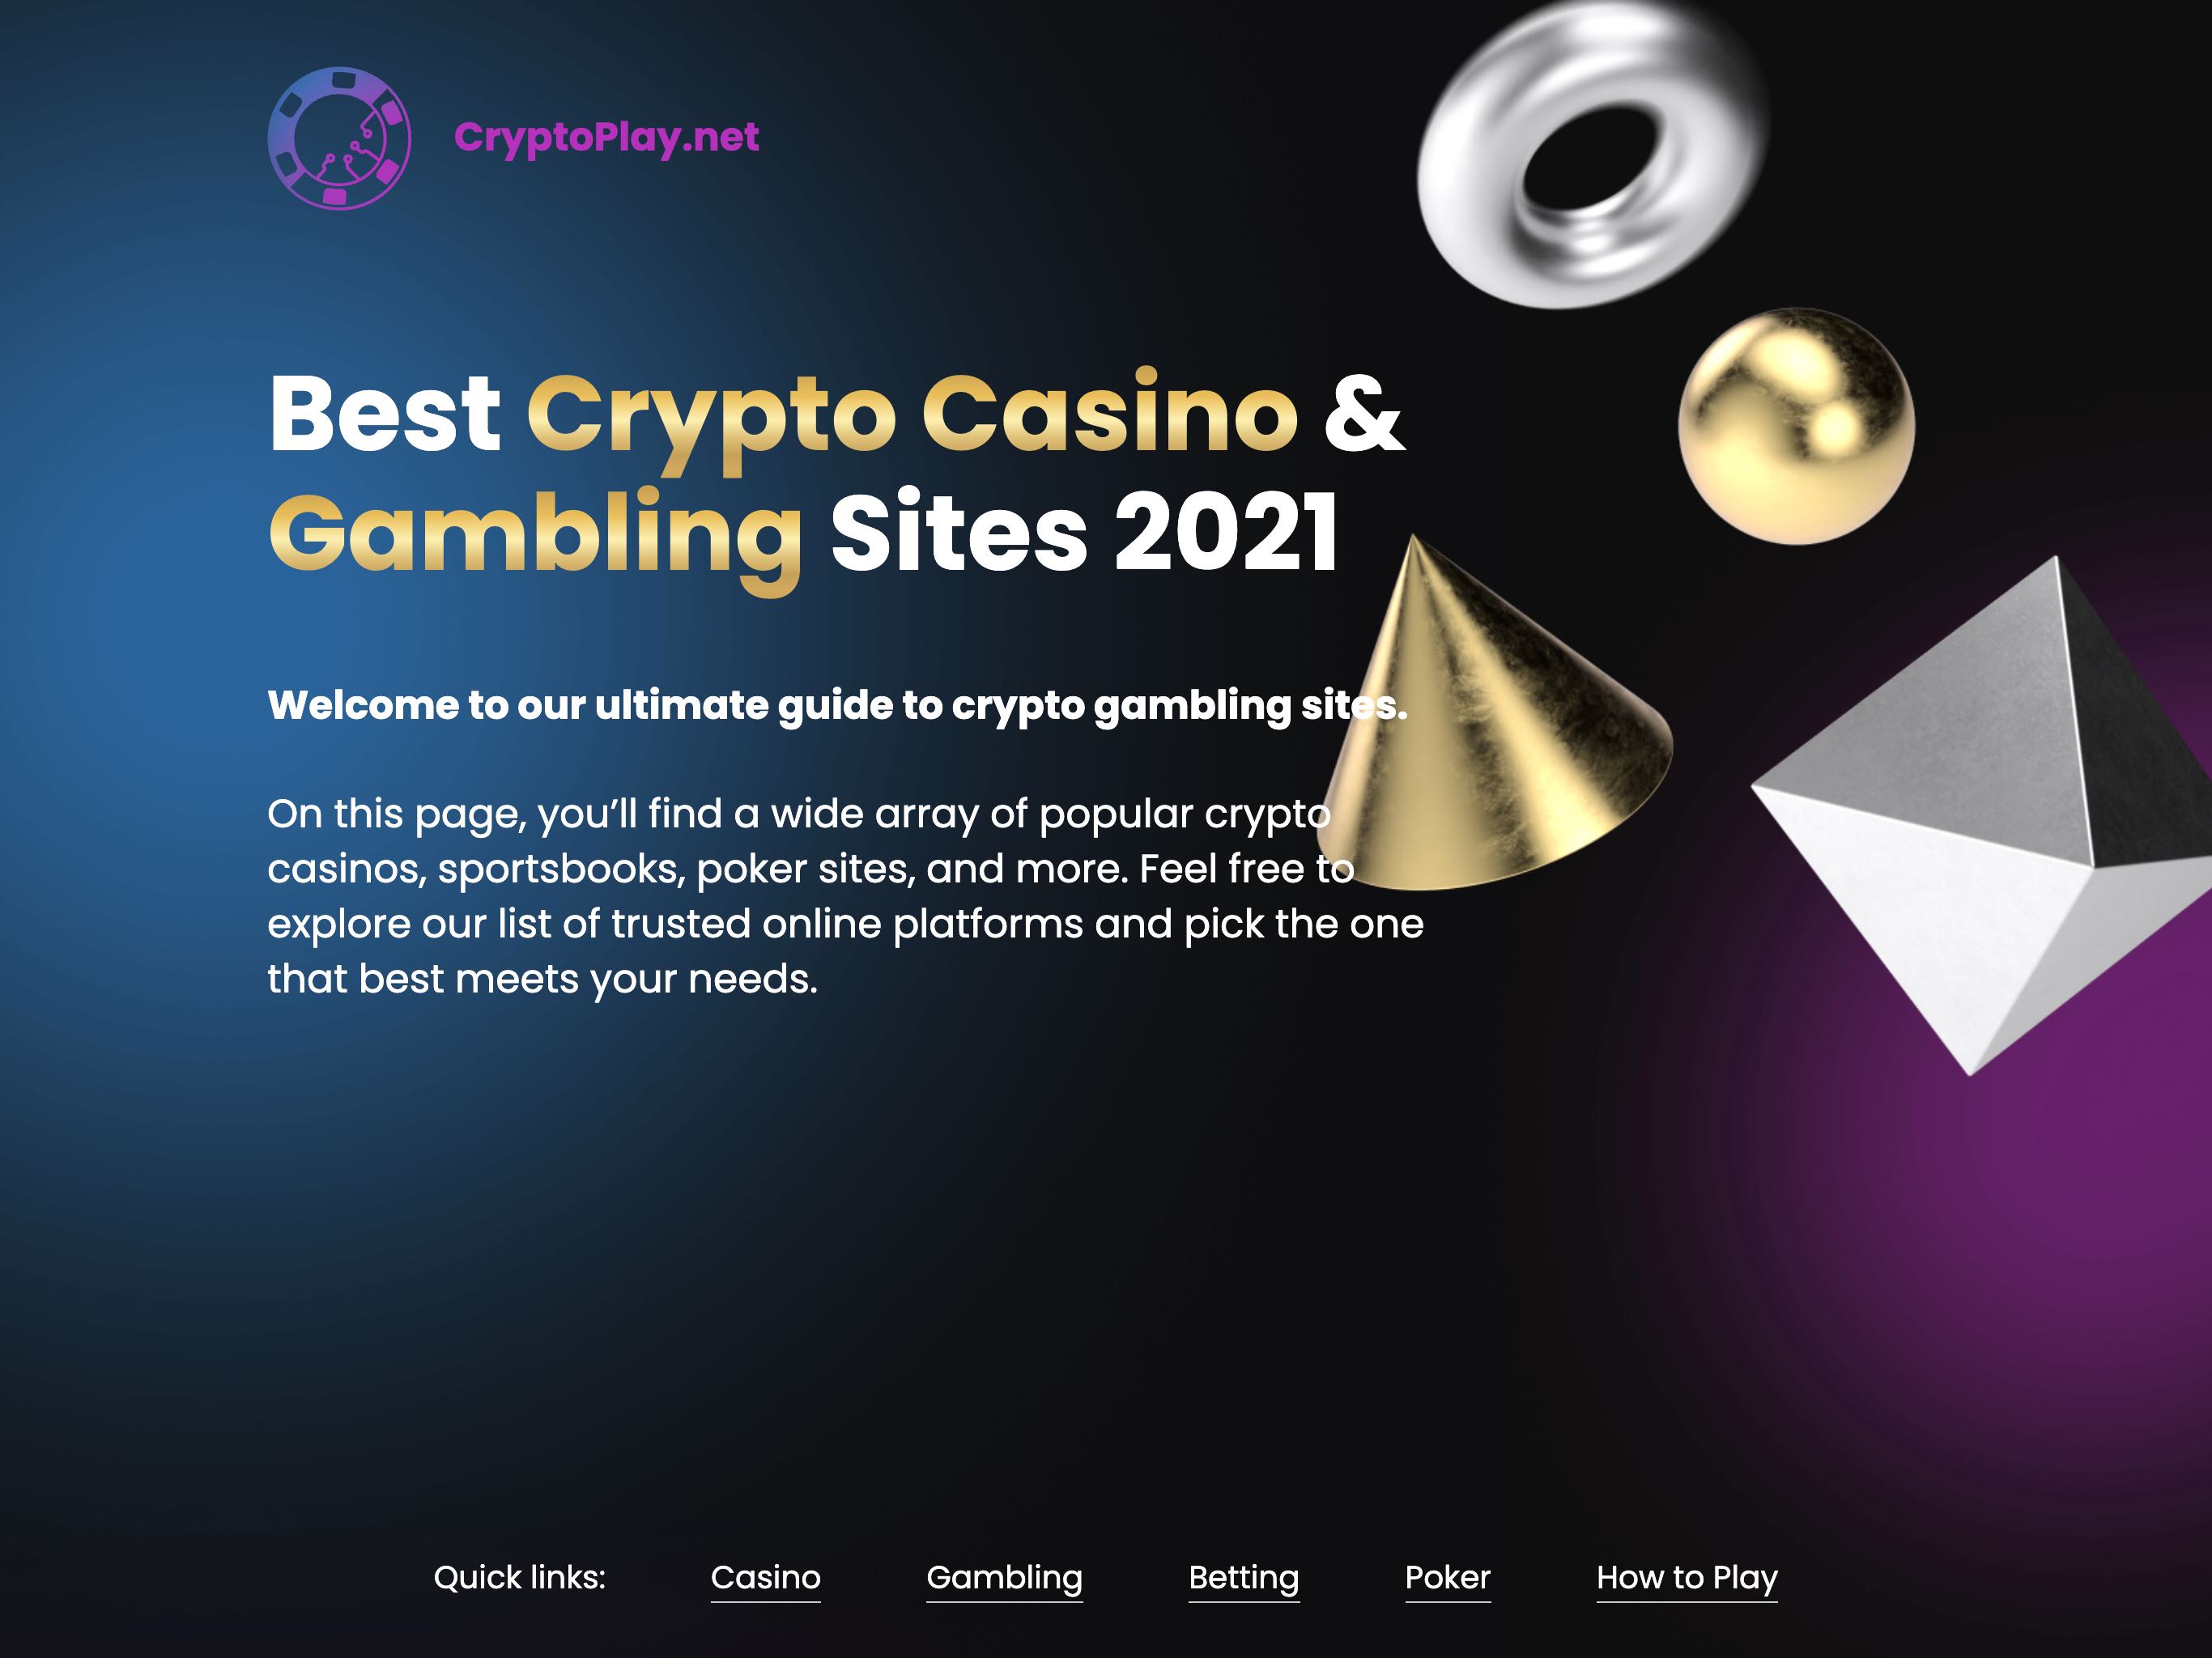 CryptoPlay.net website screenshot